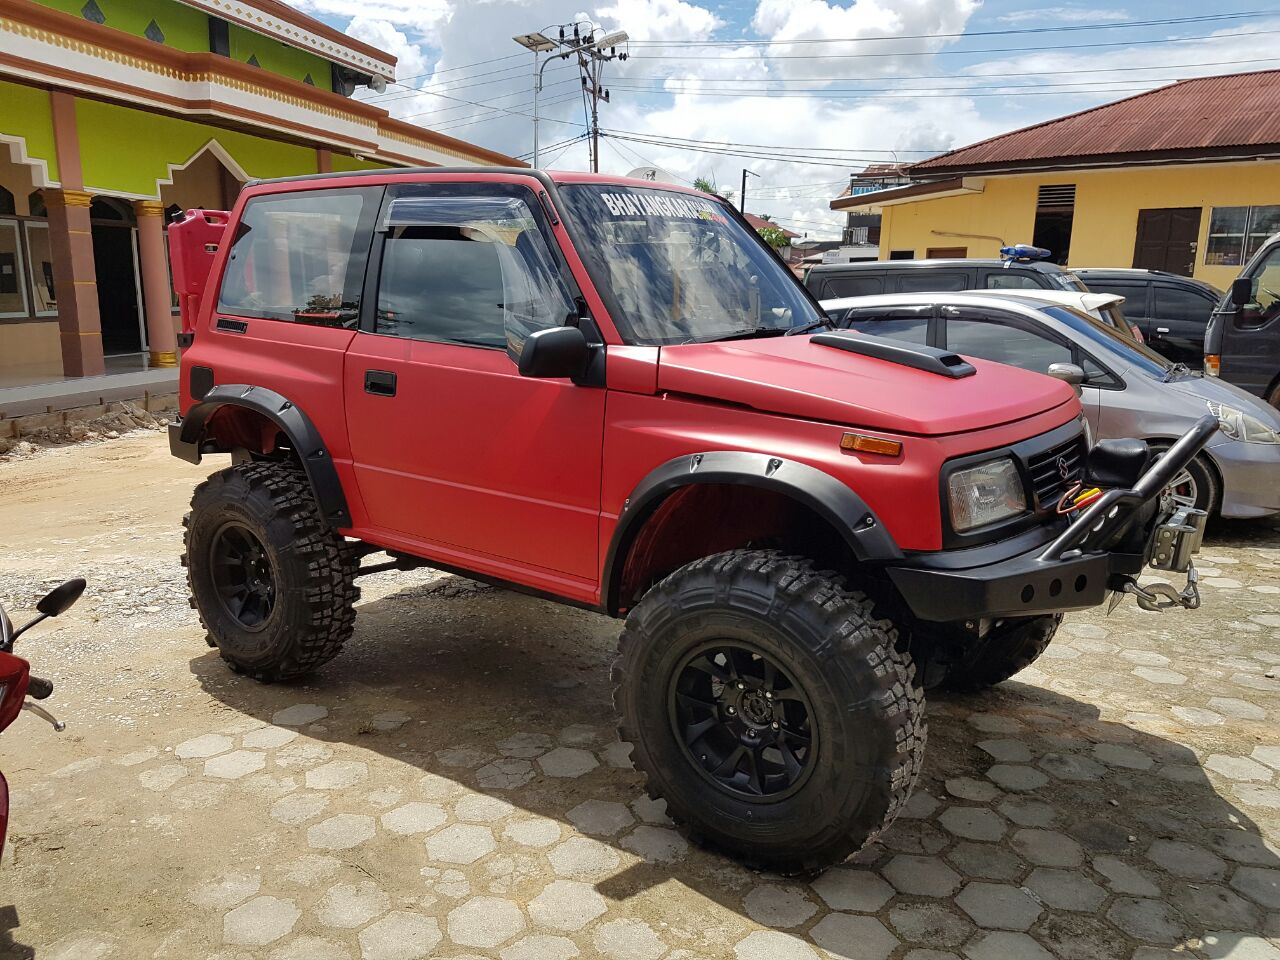 Menerima Pembuatan Bumper Untuk Jeep Bandung 